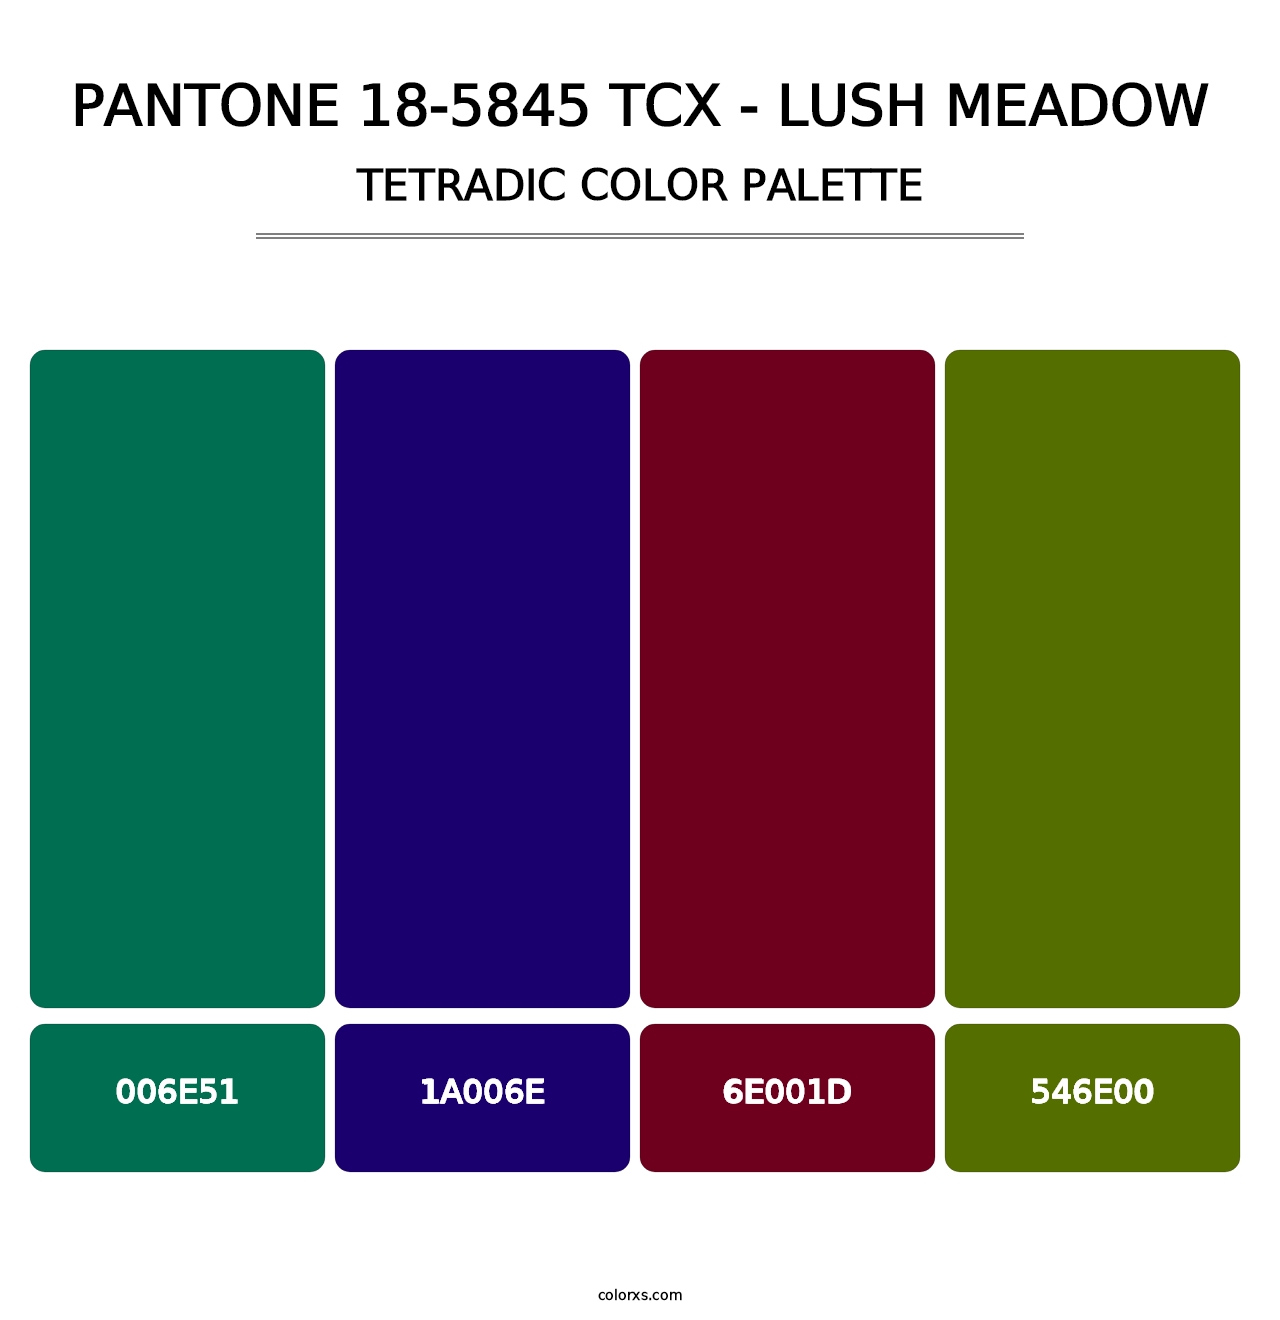 PANTONE 18-5845 TCX - Lush Meadow - Tetradic Color Palette